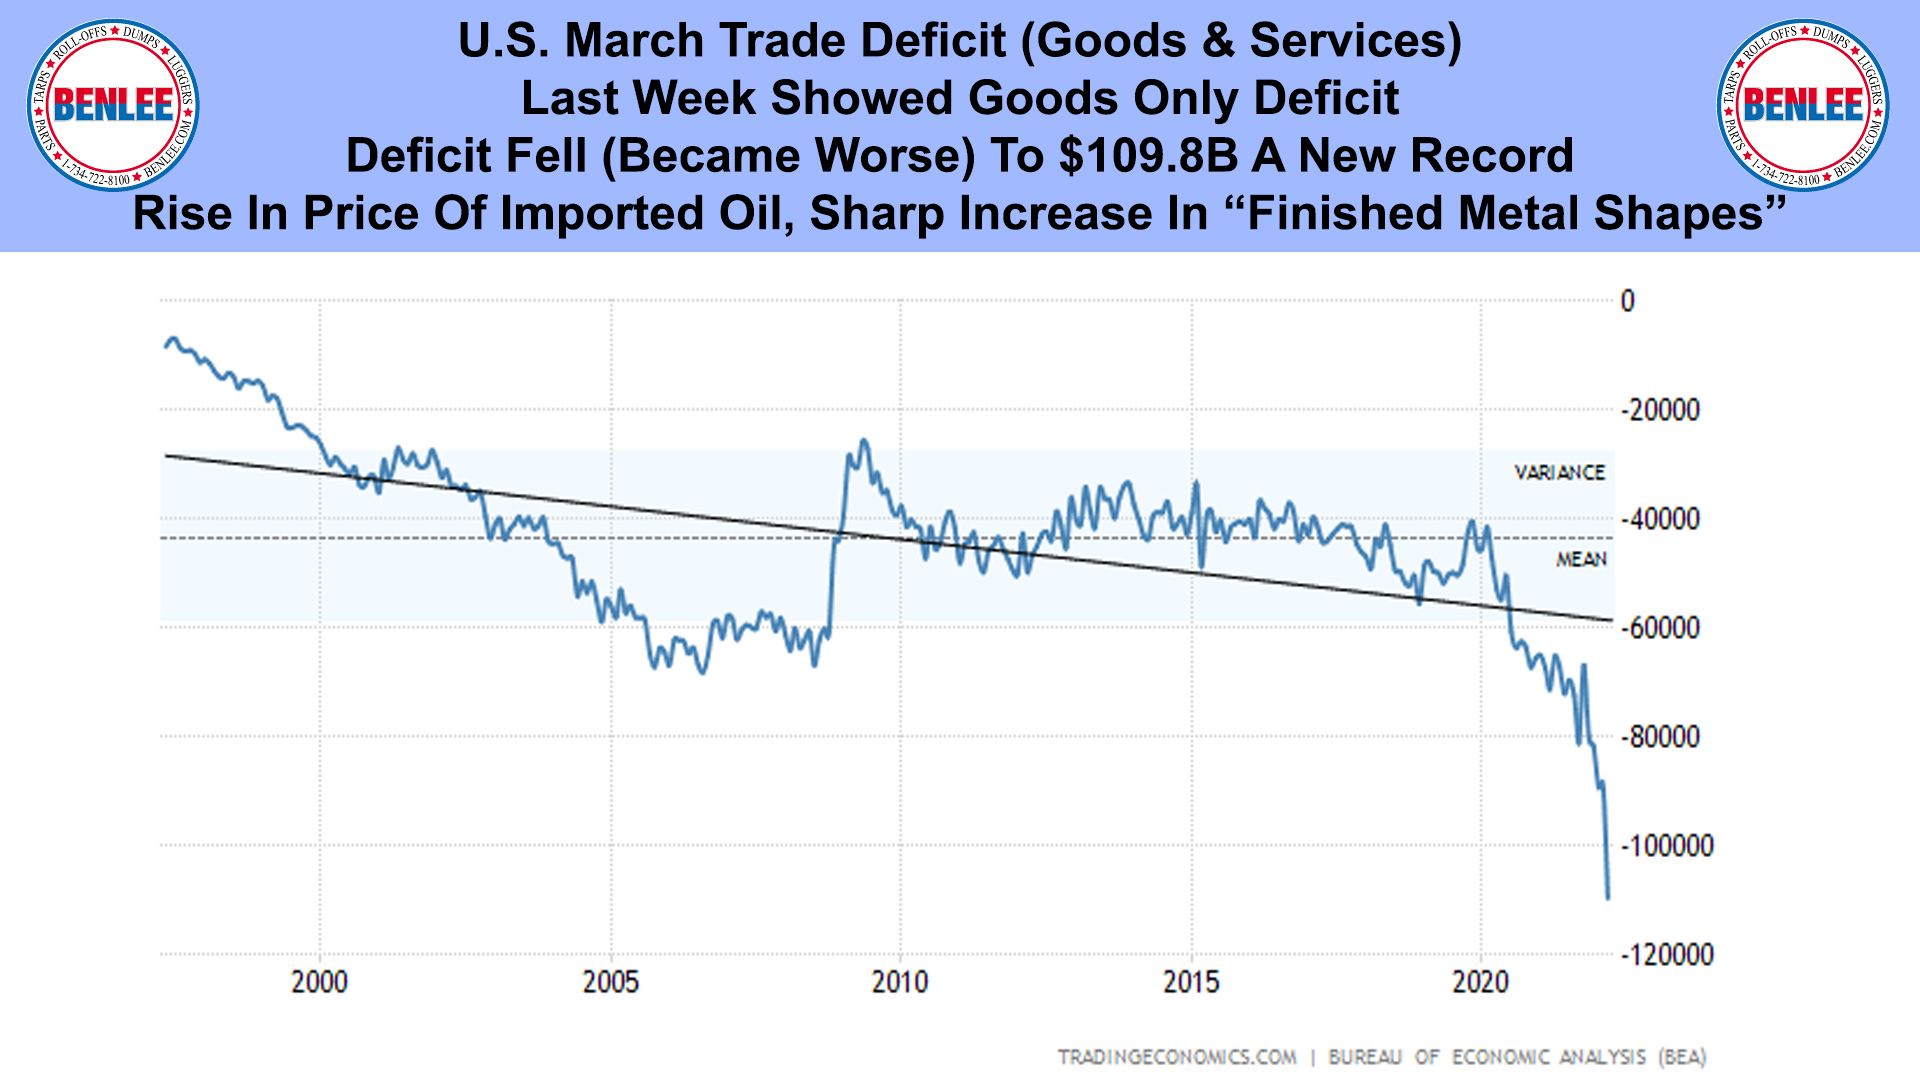 U.S. March Trade Deficit